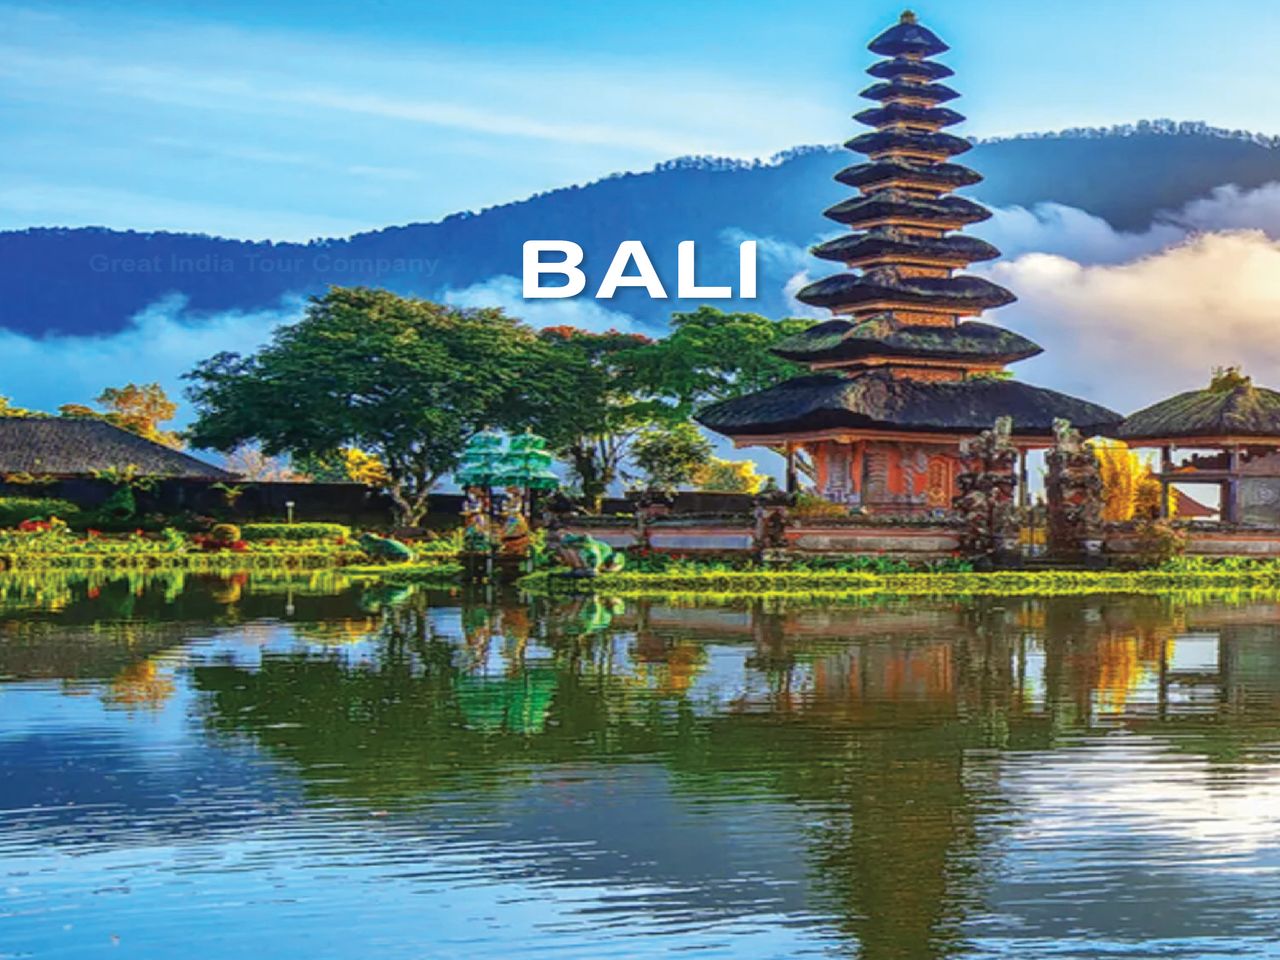 Exotic Bali - Great India Tour Company